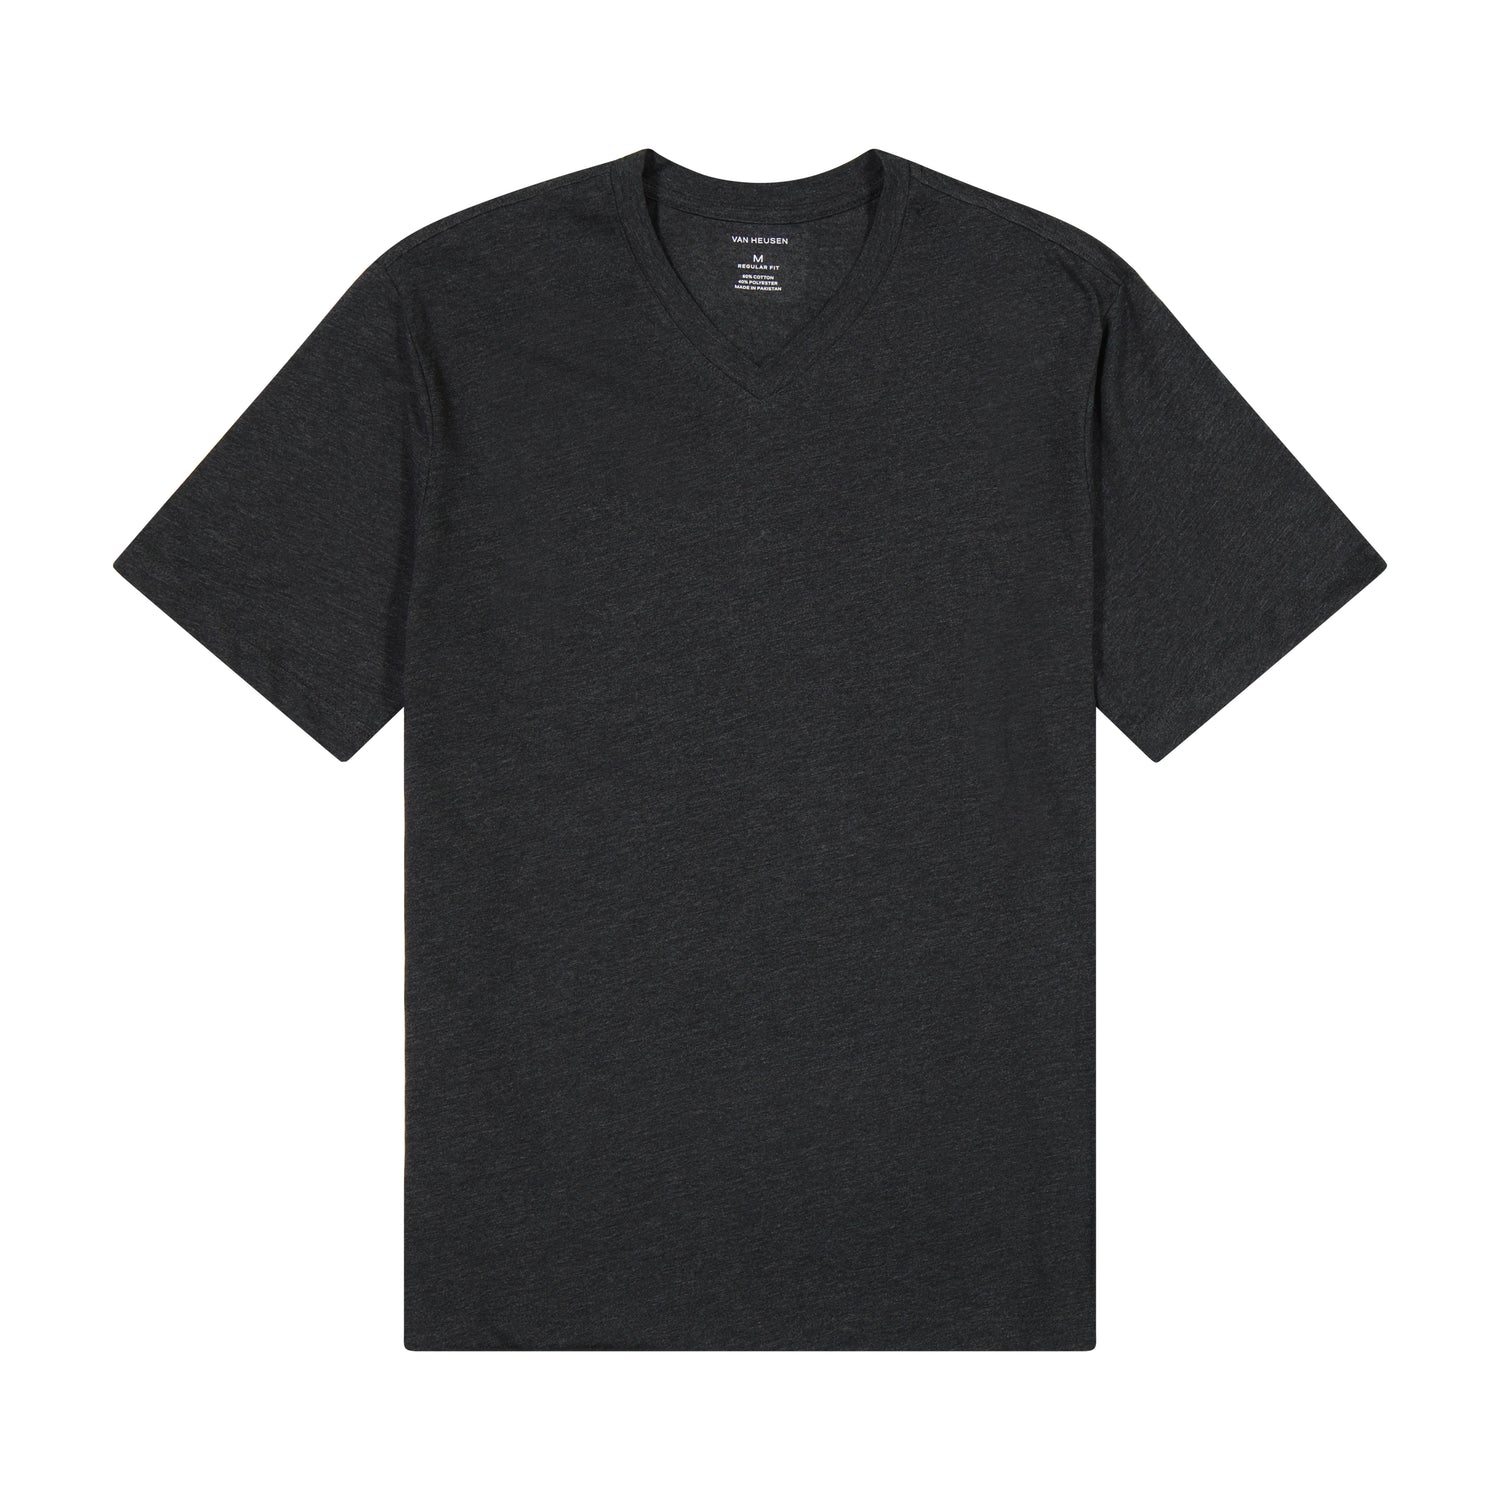 Essential Stain Shield V-Neck Short Sleeve Basic Tee Shirt